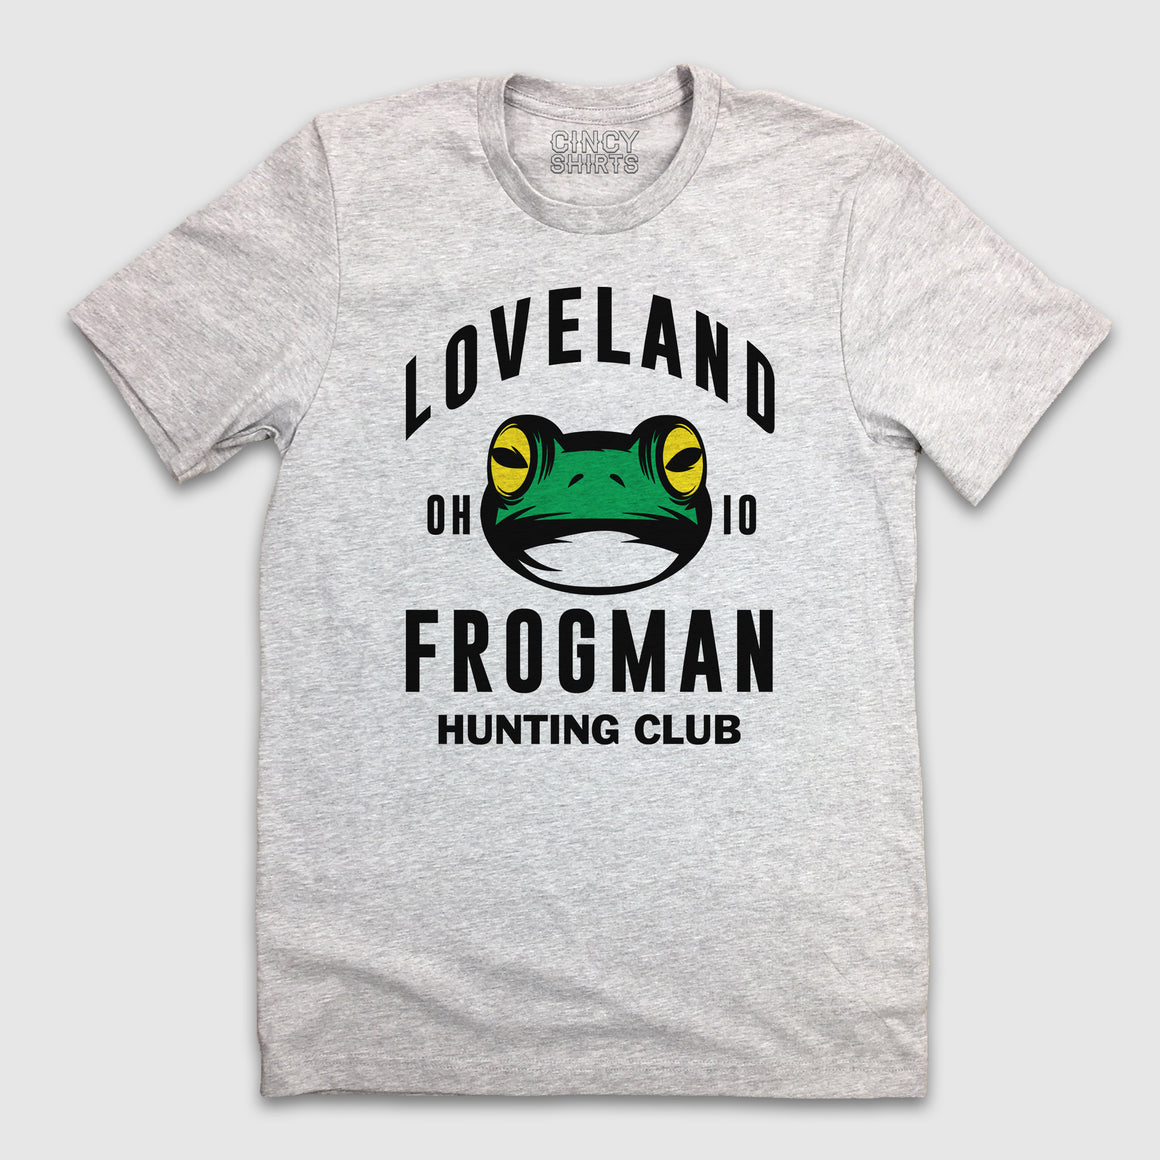 The Loveland Frogman Hunting Club - Cincy Shirts